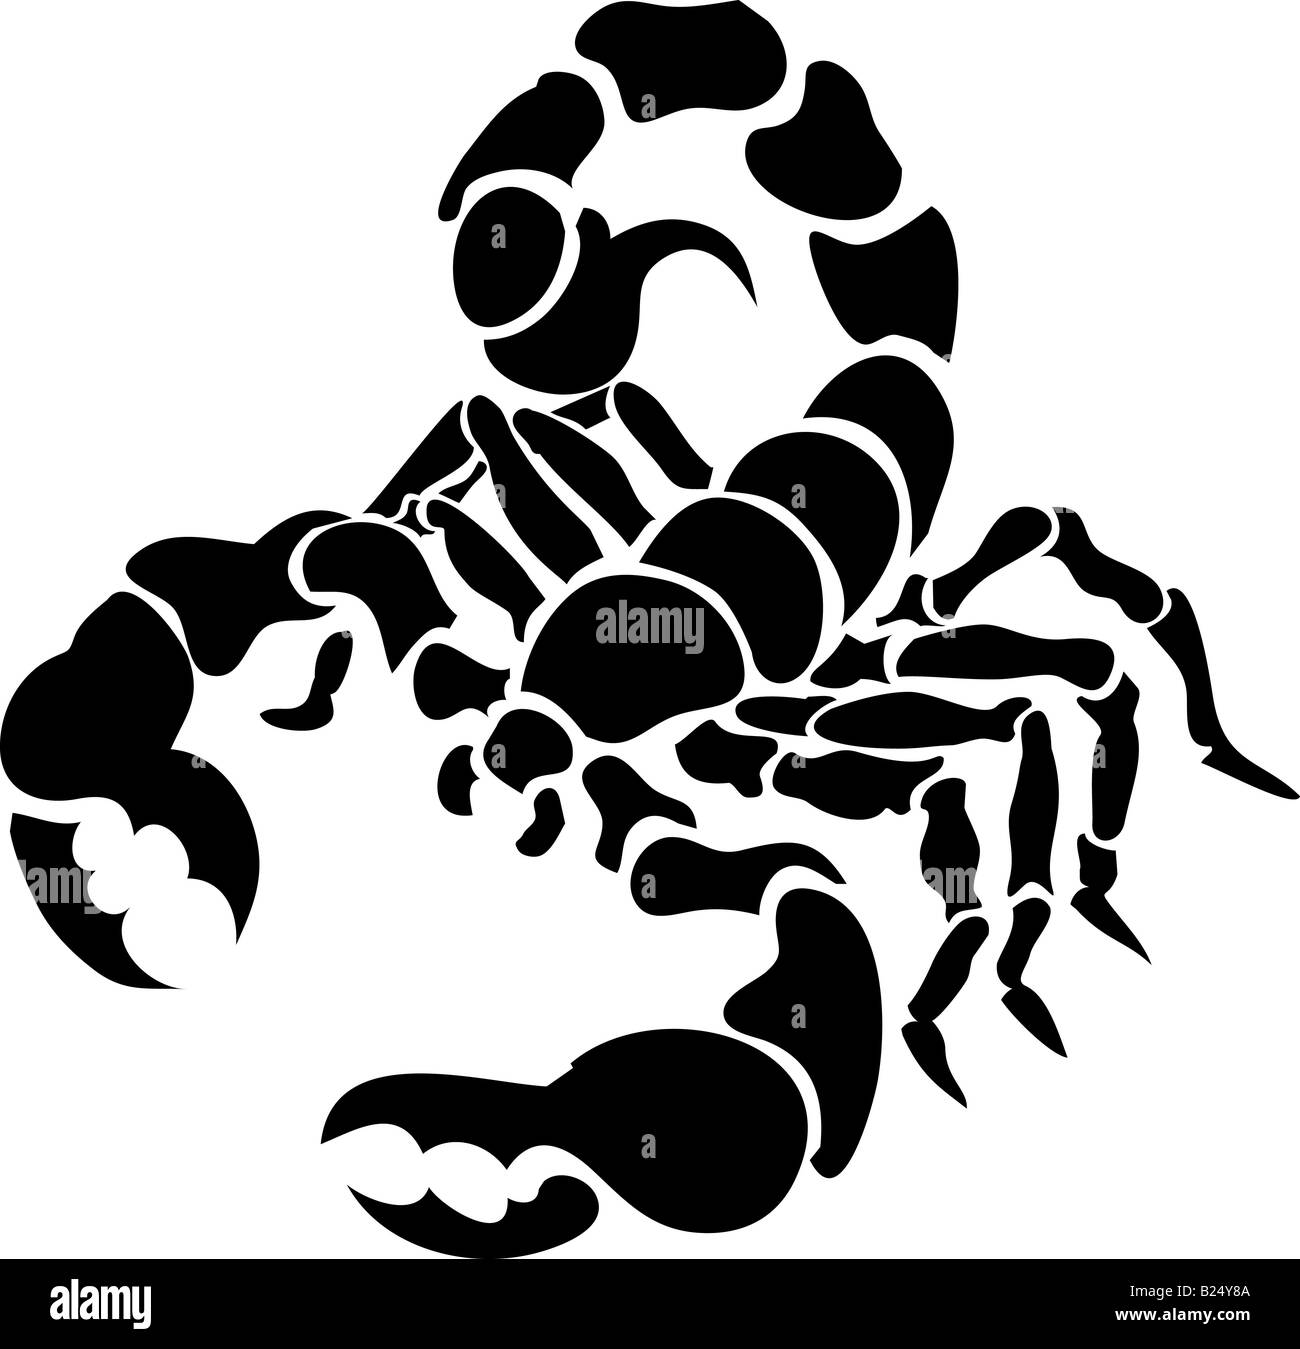 Scorpion. Monochrome illustration of a stylised scorpion Stock Photo - Alamy